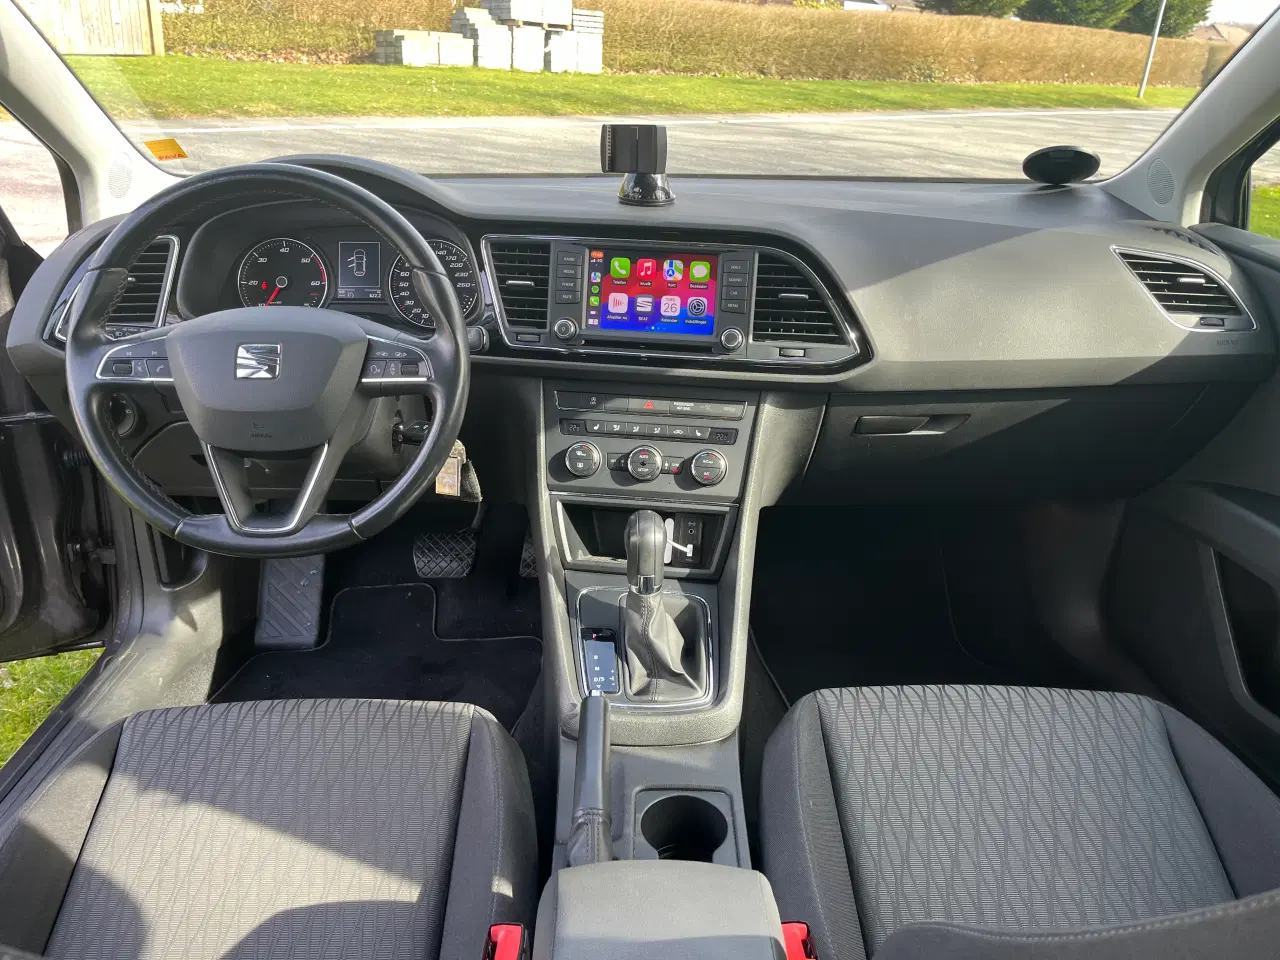 Billede 7 - Seat Leon, 2,0 TDI 150 hk